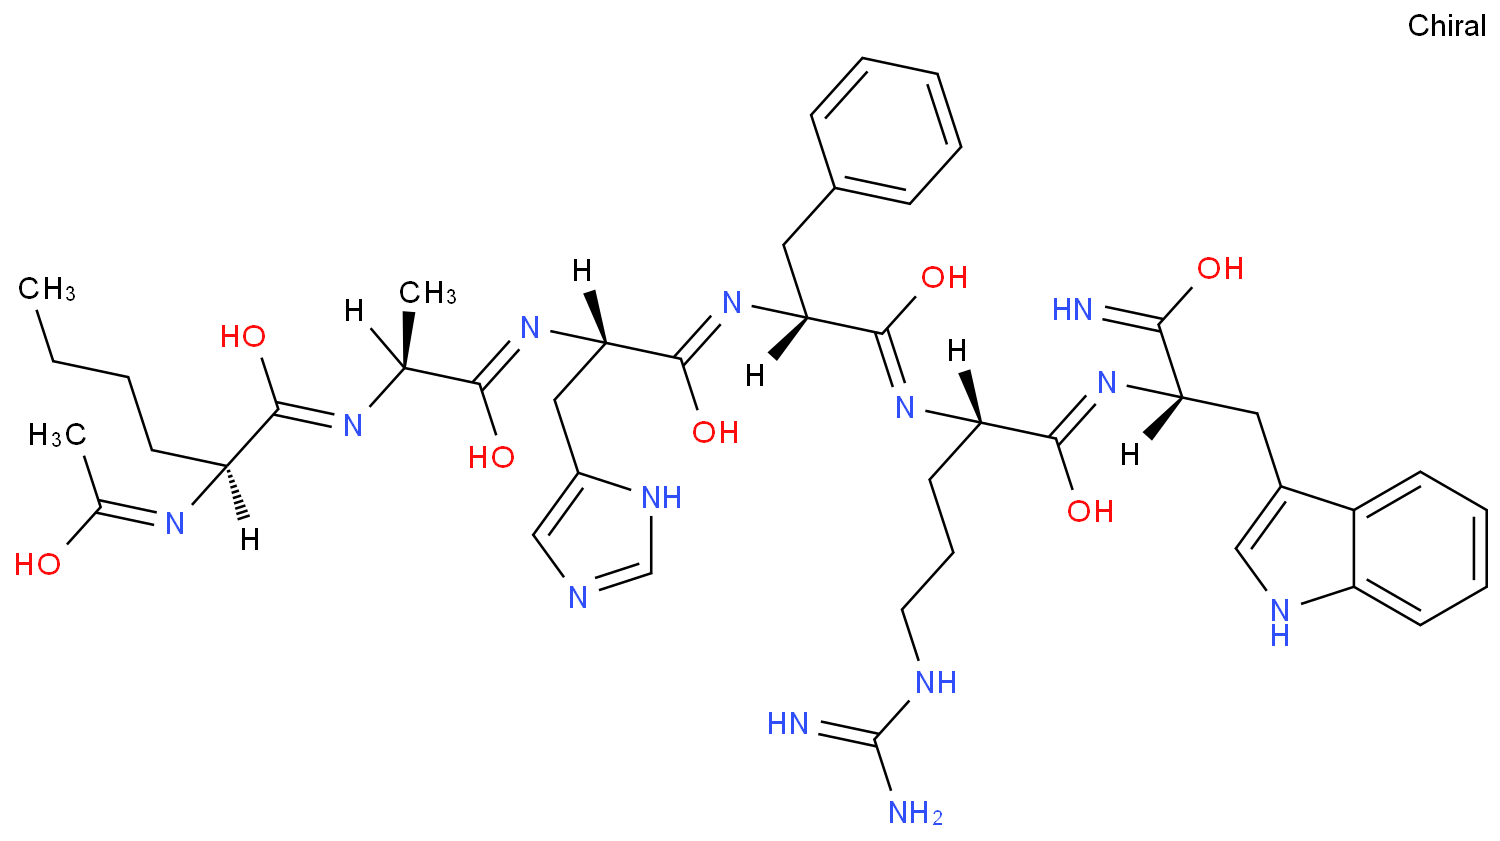 Acetyl Hexapeptide-1